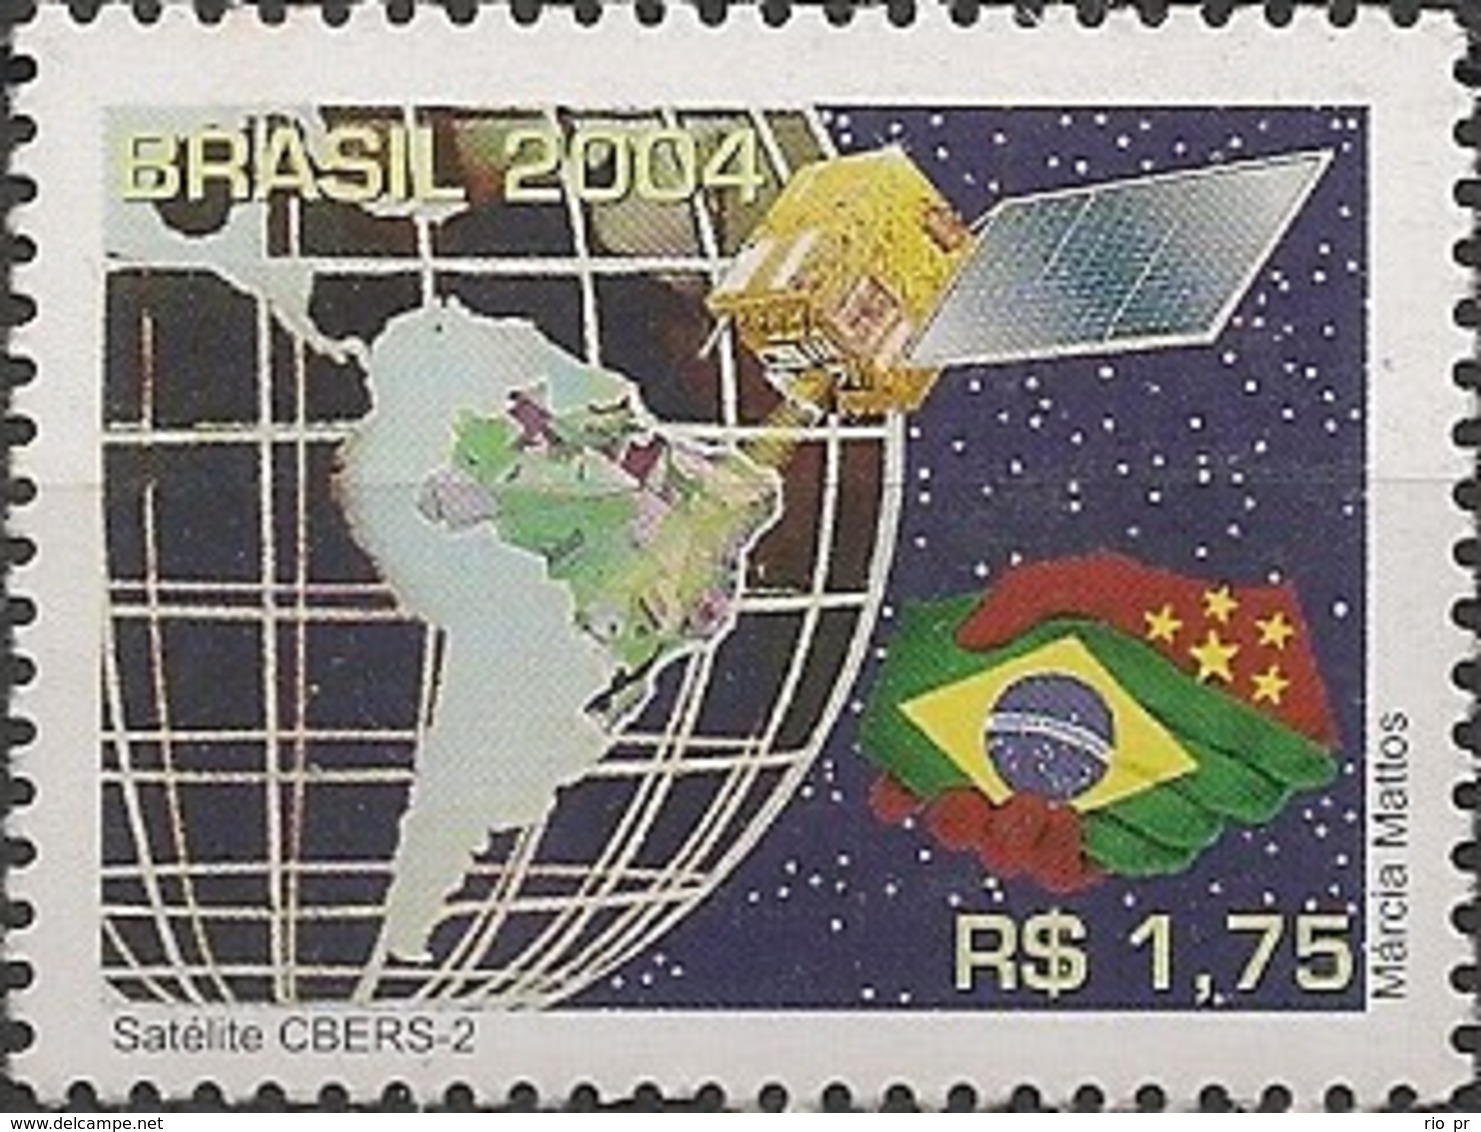 BRAZIL - CBERS-2 SATELLITE 2004 - MNH - Südamerika